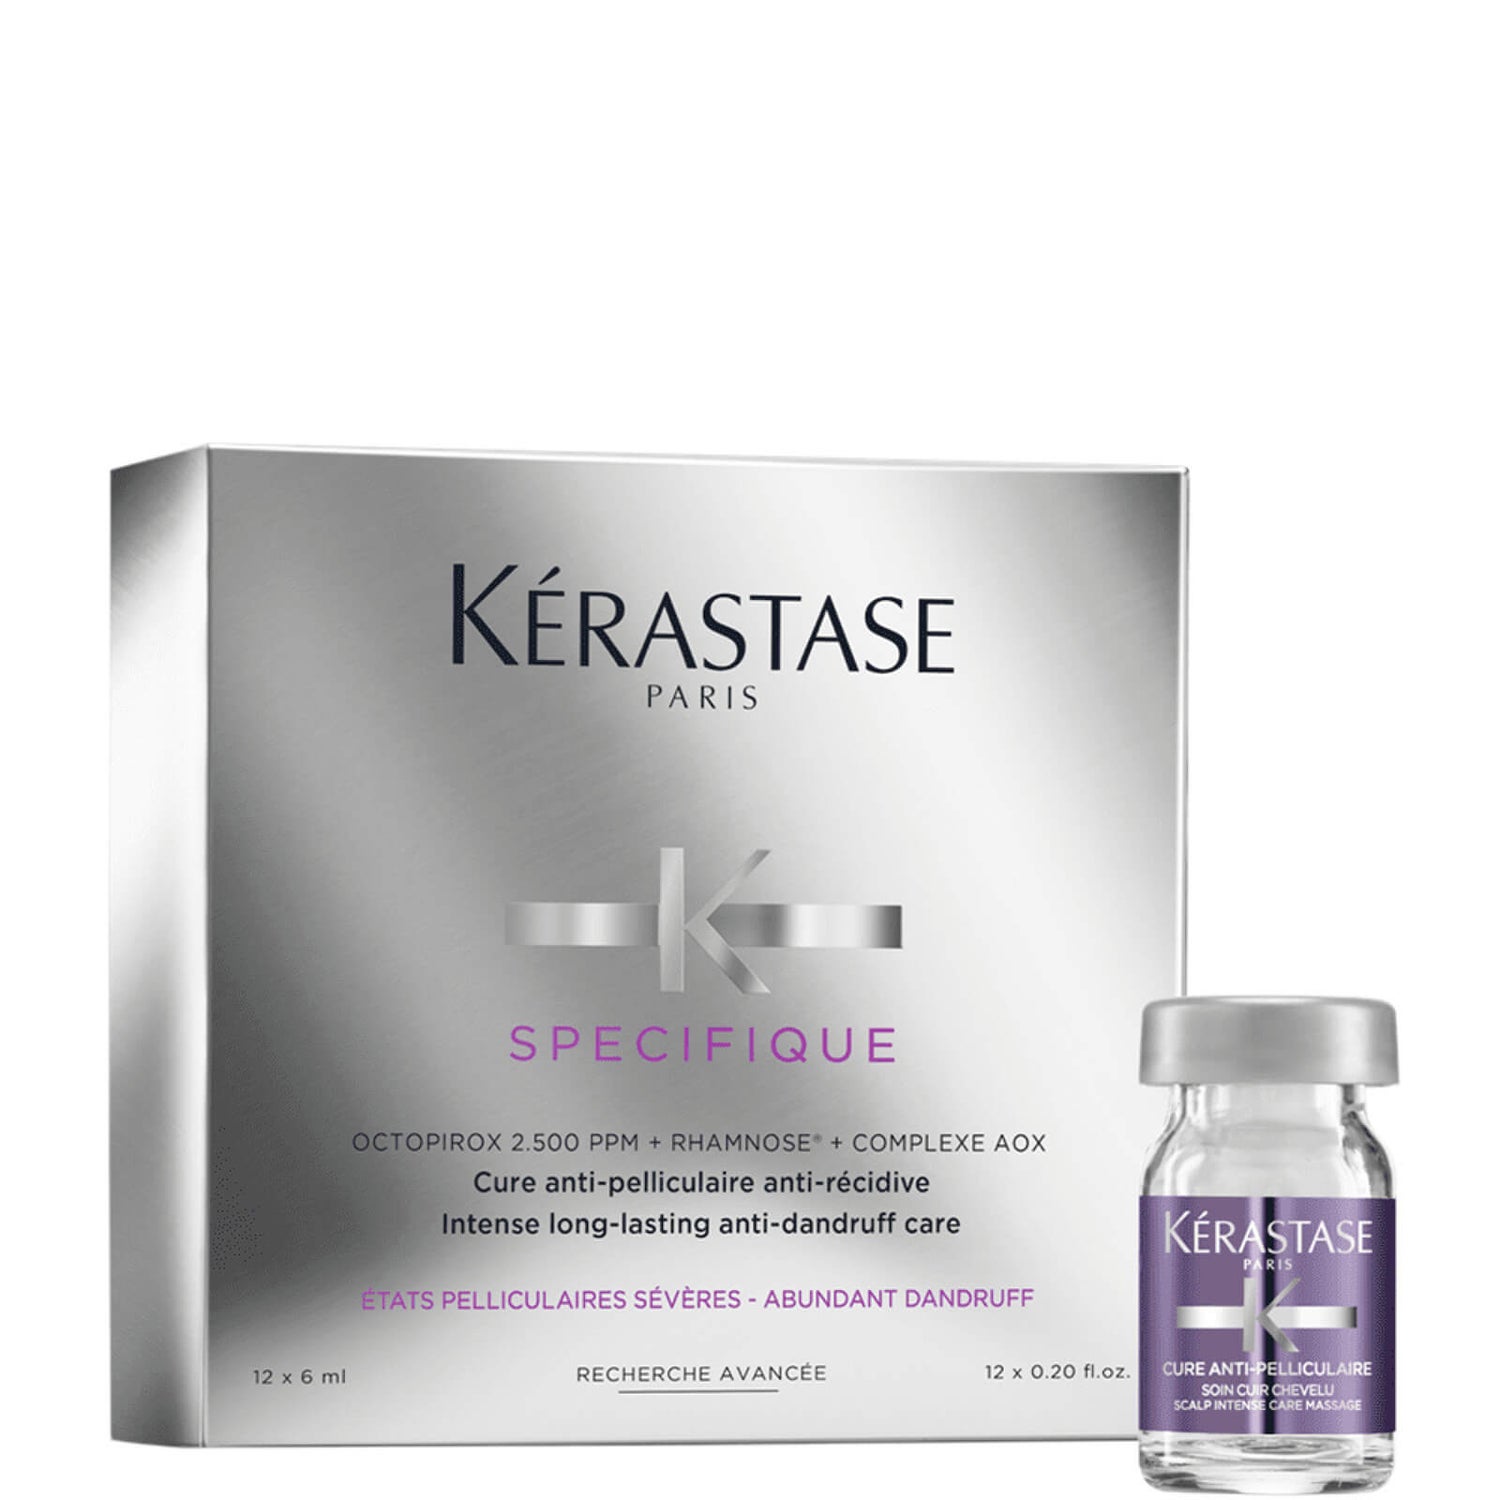 Kérastase Specifique Cure Anti-Pelliculaire Anti-Recidive Treatment 12 x 6ml